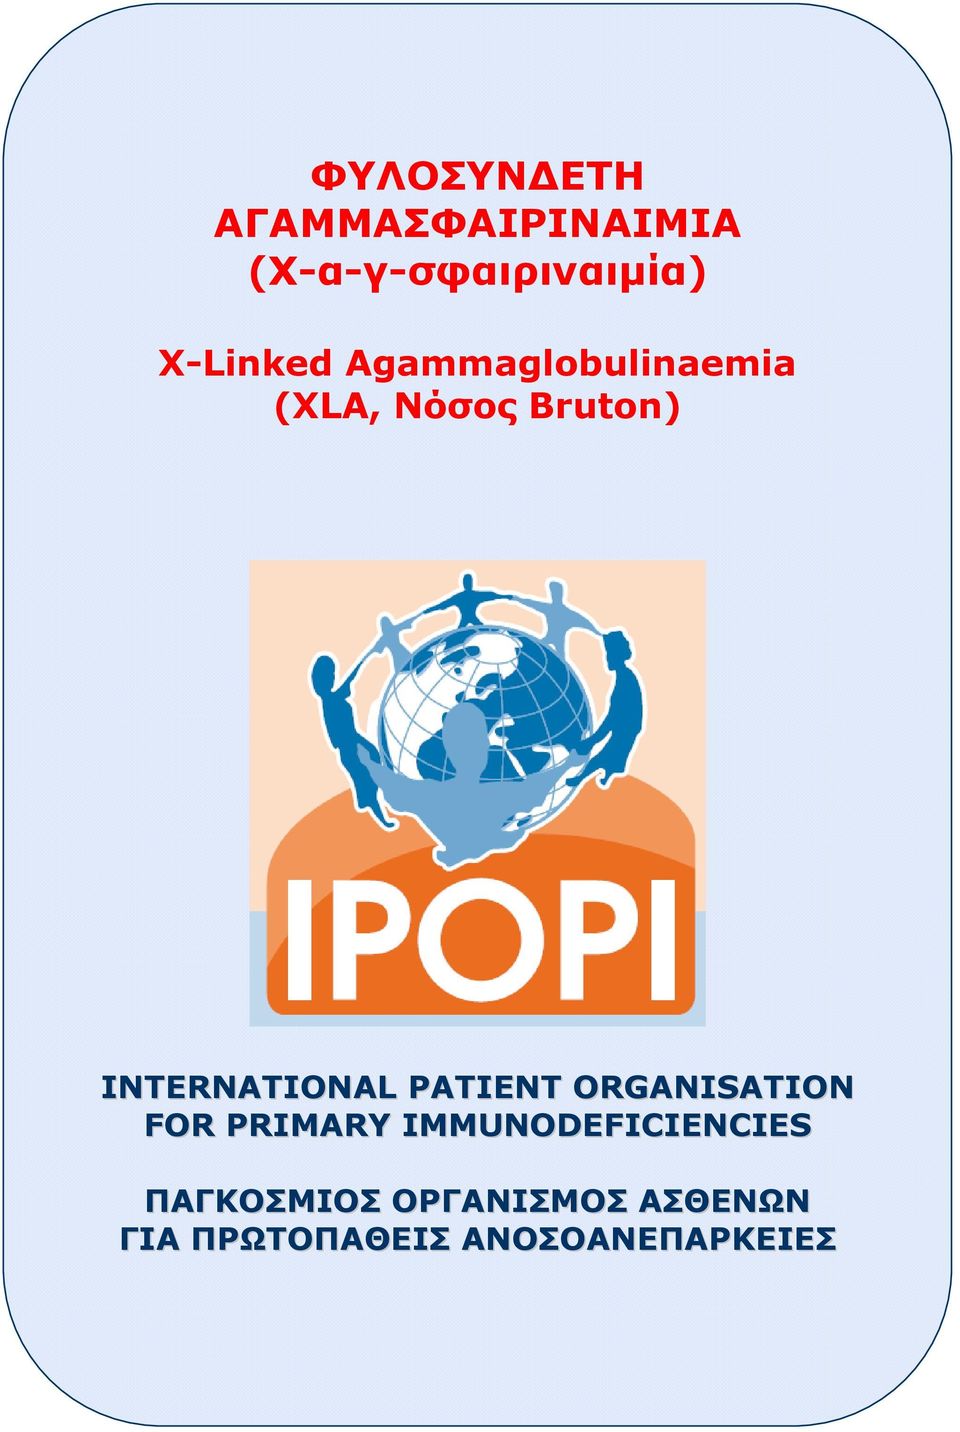 INTERNATIONAL PATIENT ORGANISATION FOR PRIMARY